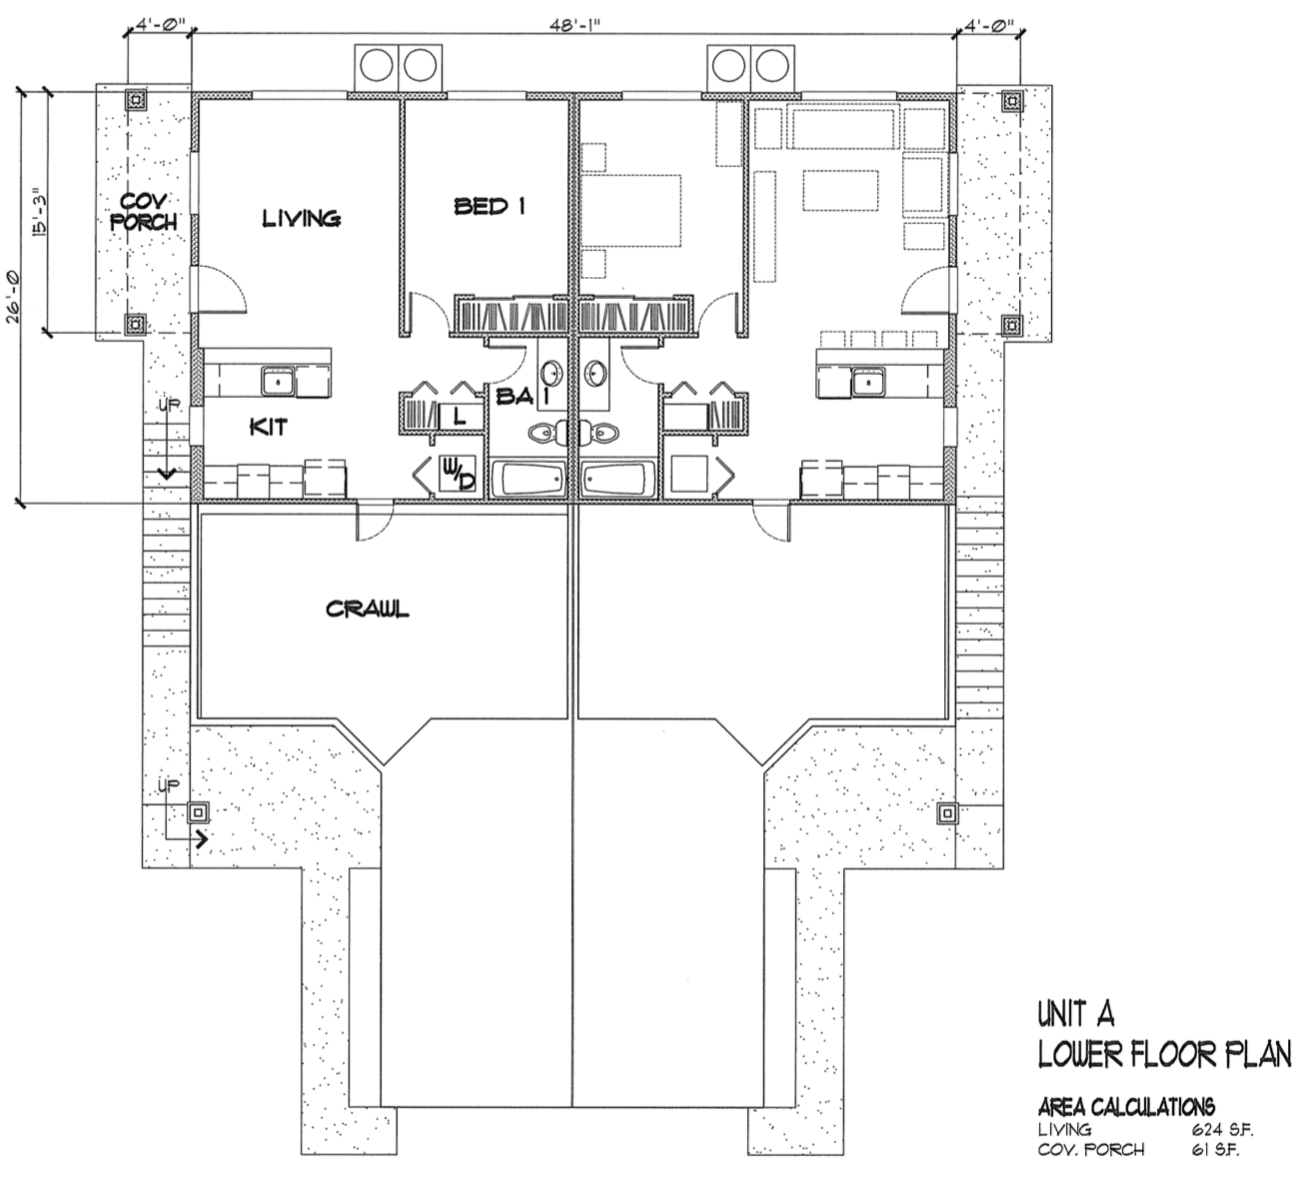 Unit A Lower Floor Plan.png